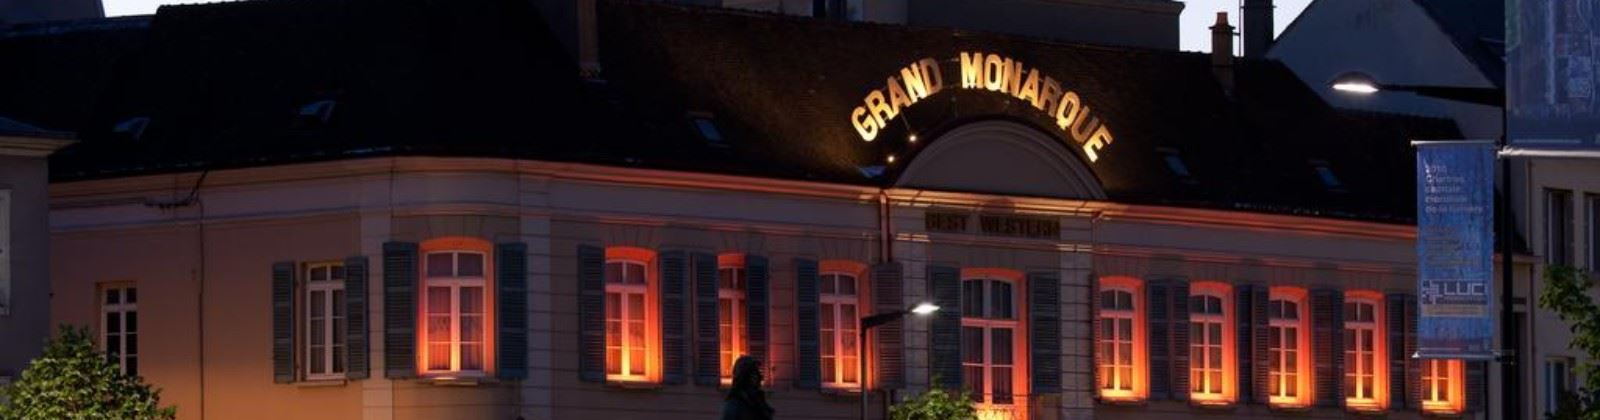 le grand monarque olevene hotel restaurant convention reunion 